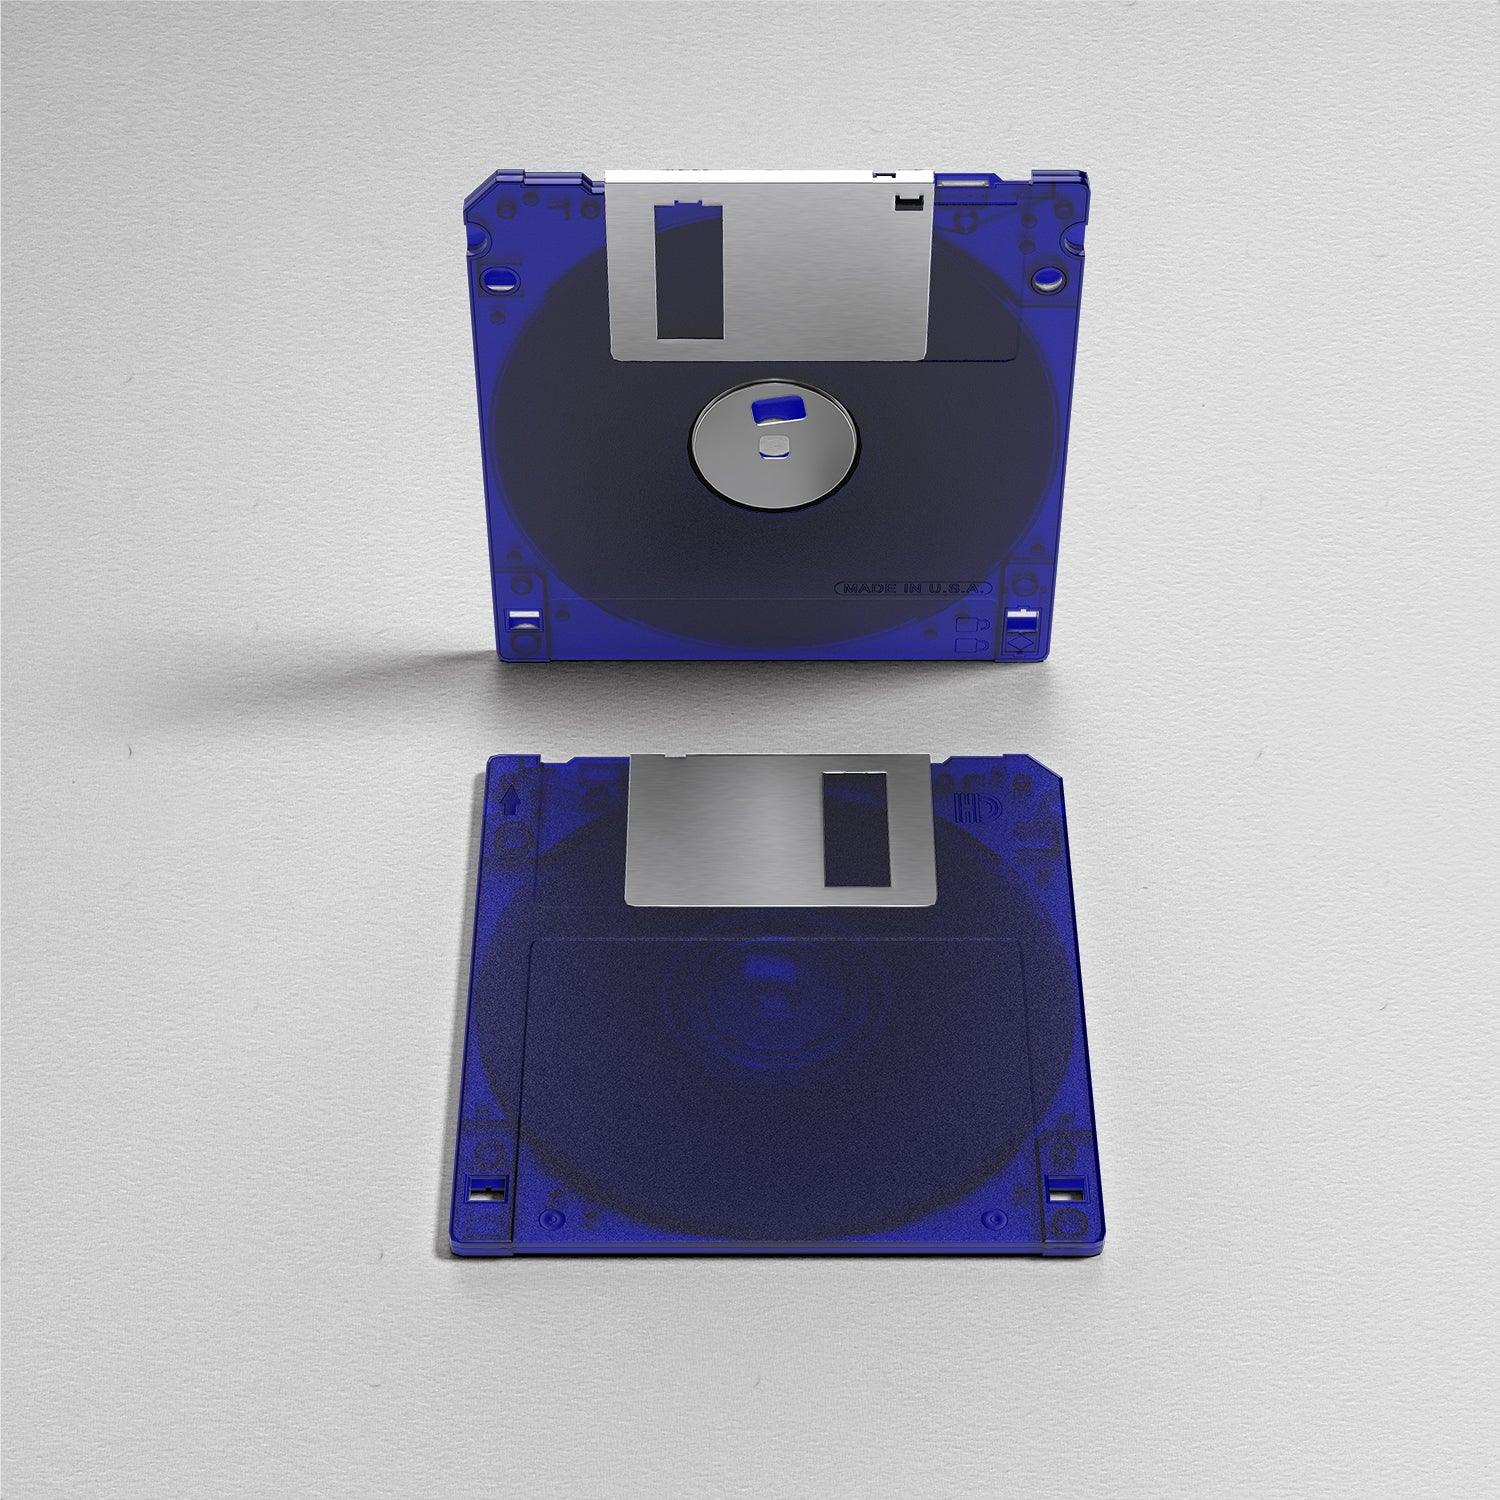 3.5" Floppy Discs Mockups Collection